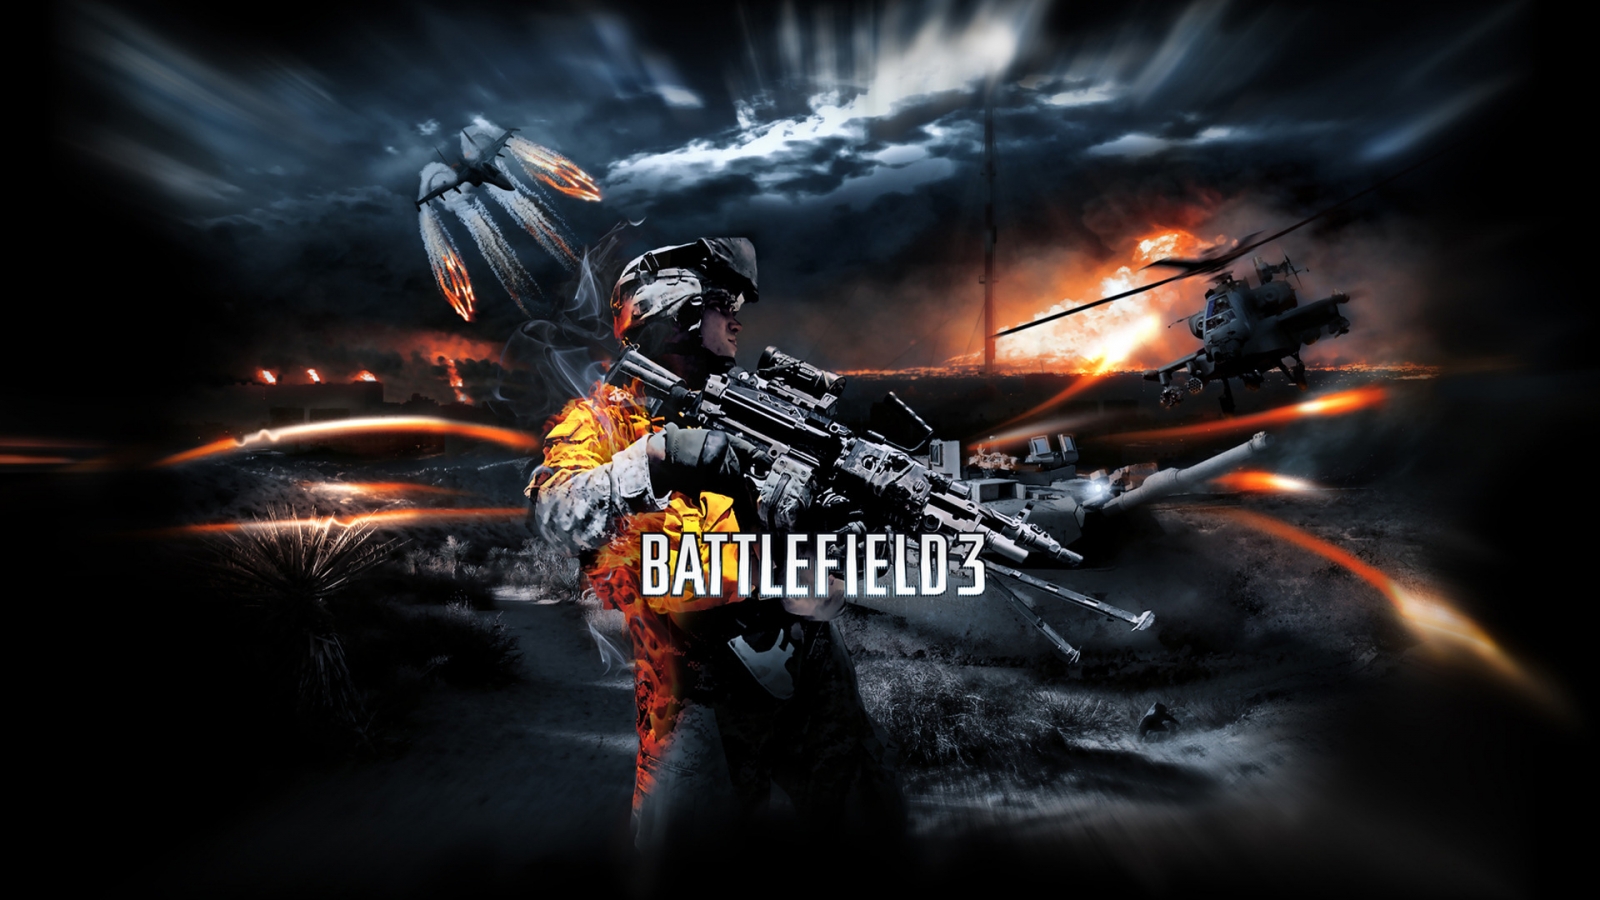 Battlefield 3 Poster for 1600 x 900 HDTV resolution